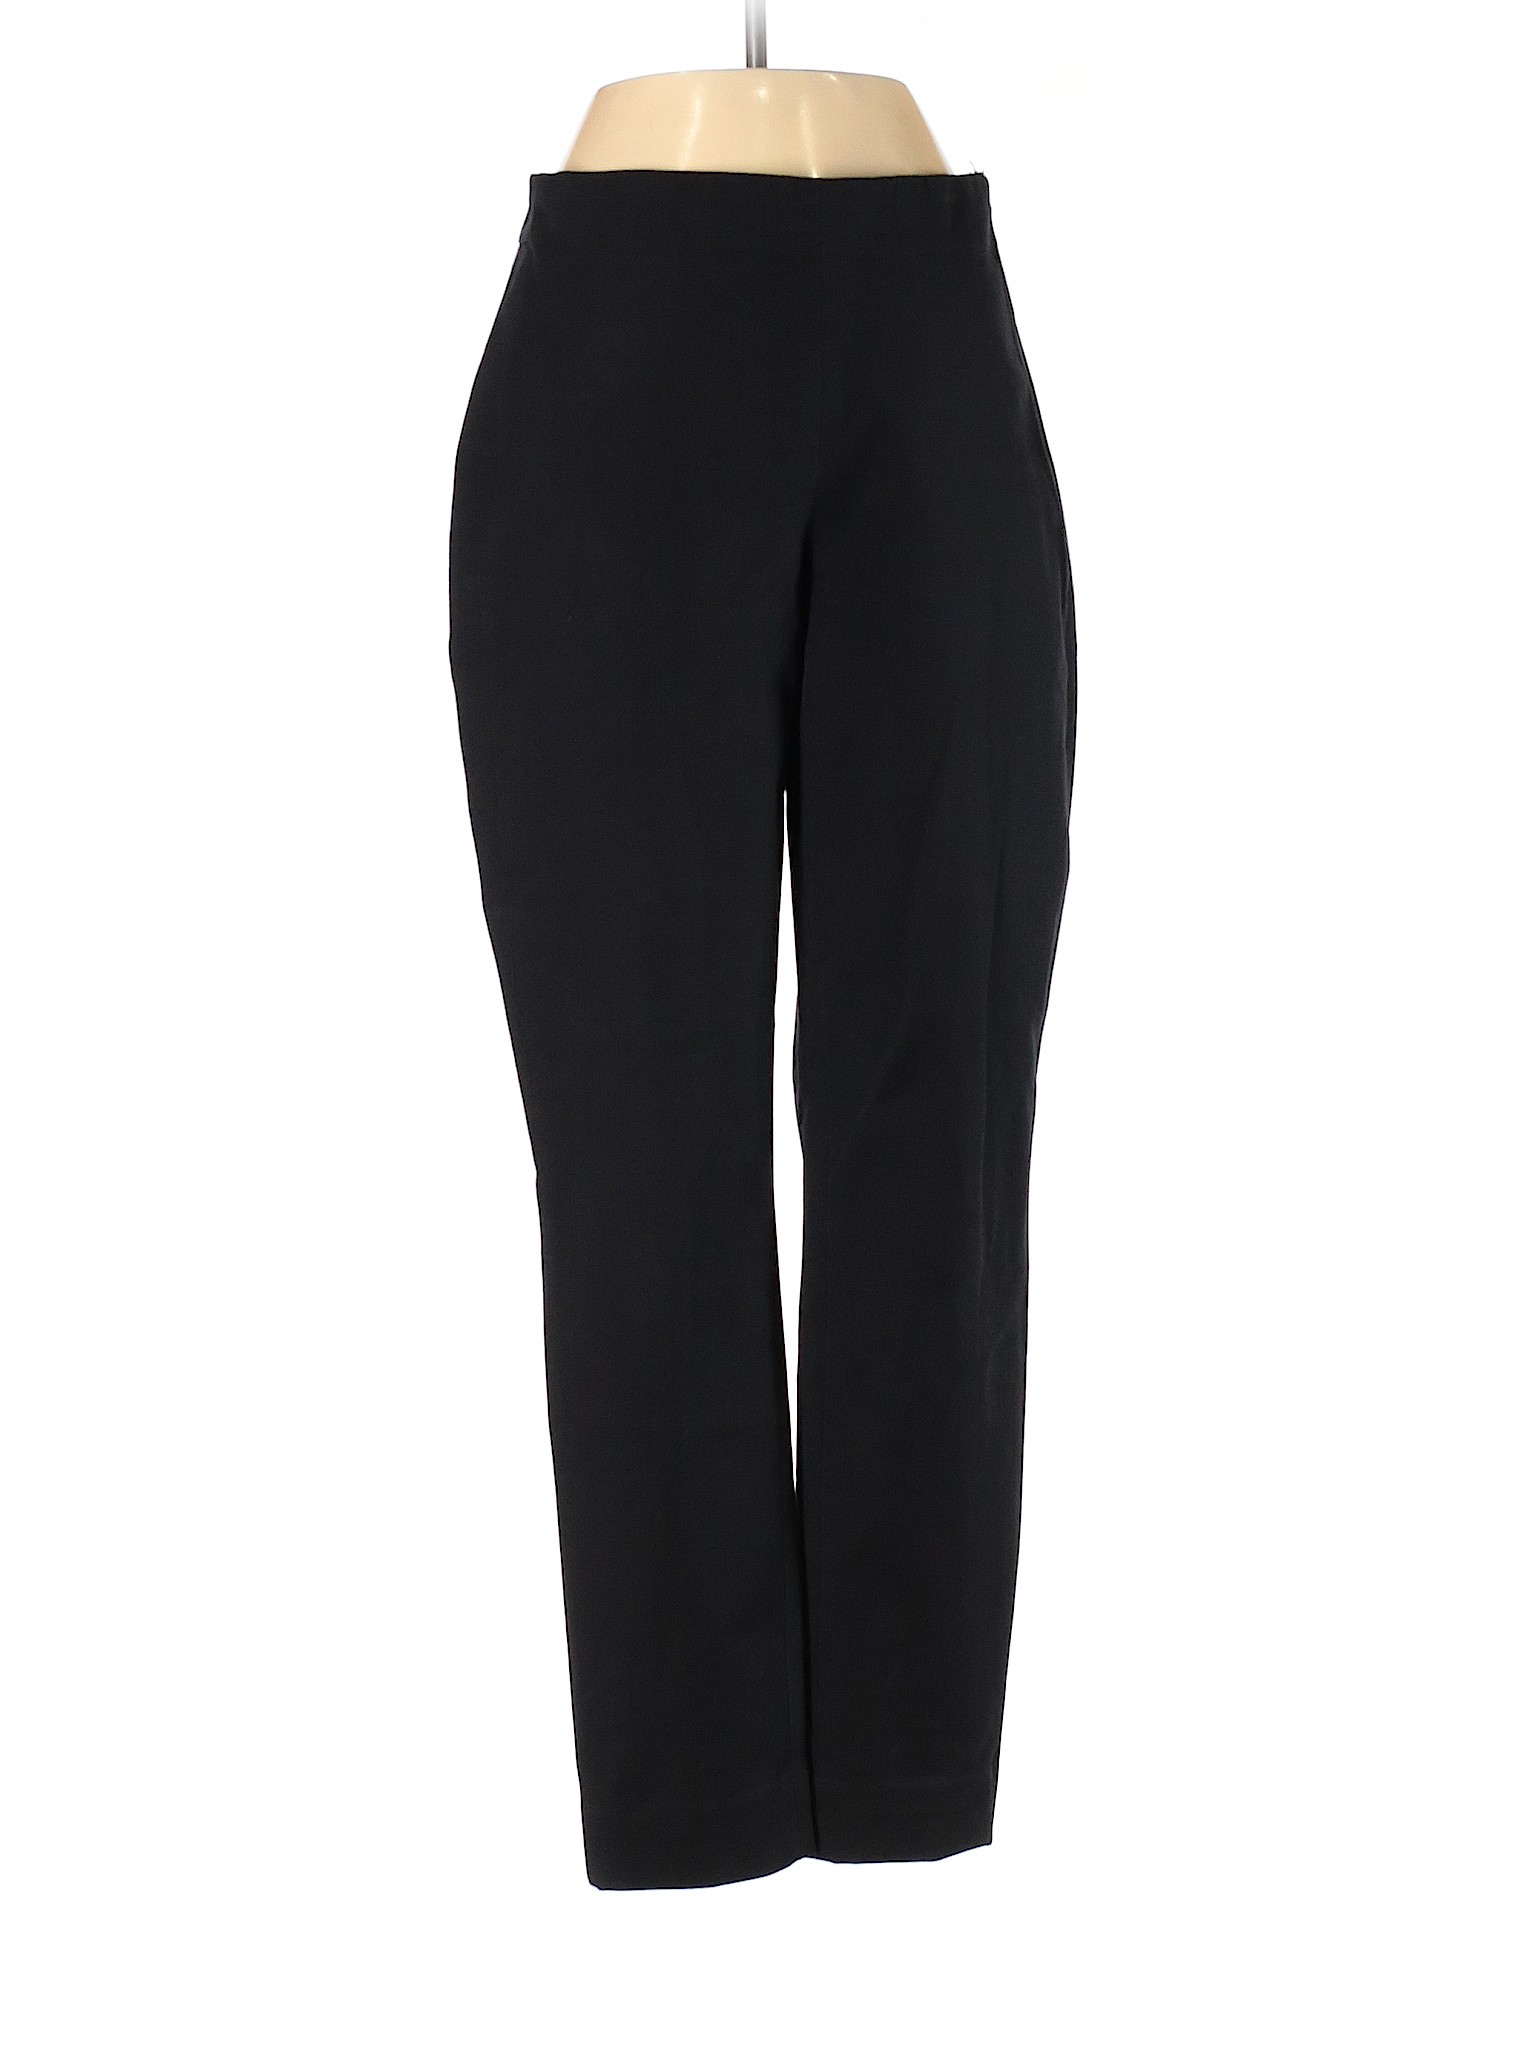 Everlane Women Black Dress Pants 4 | eBay